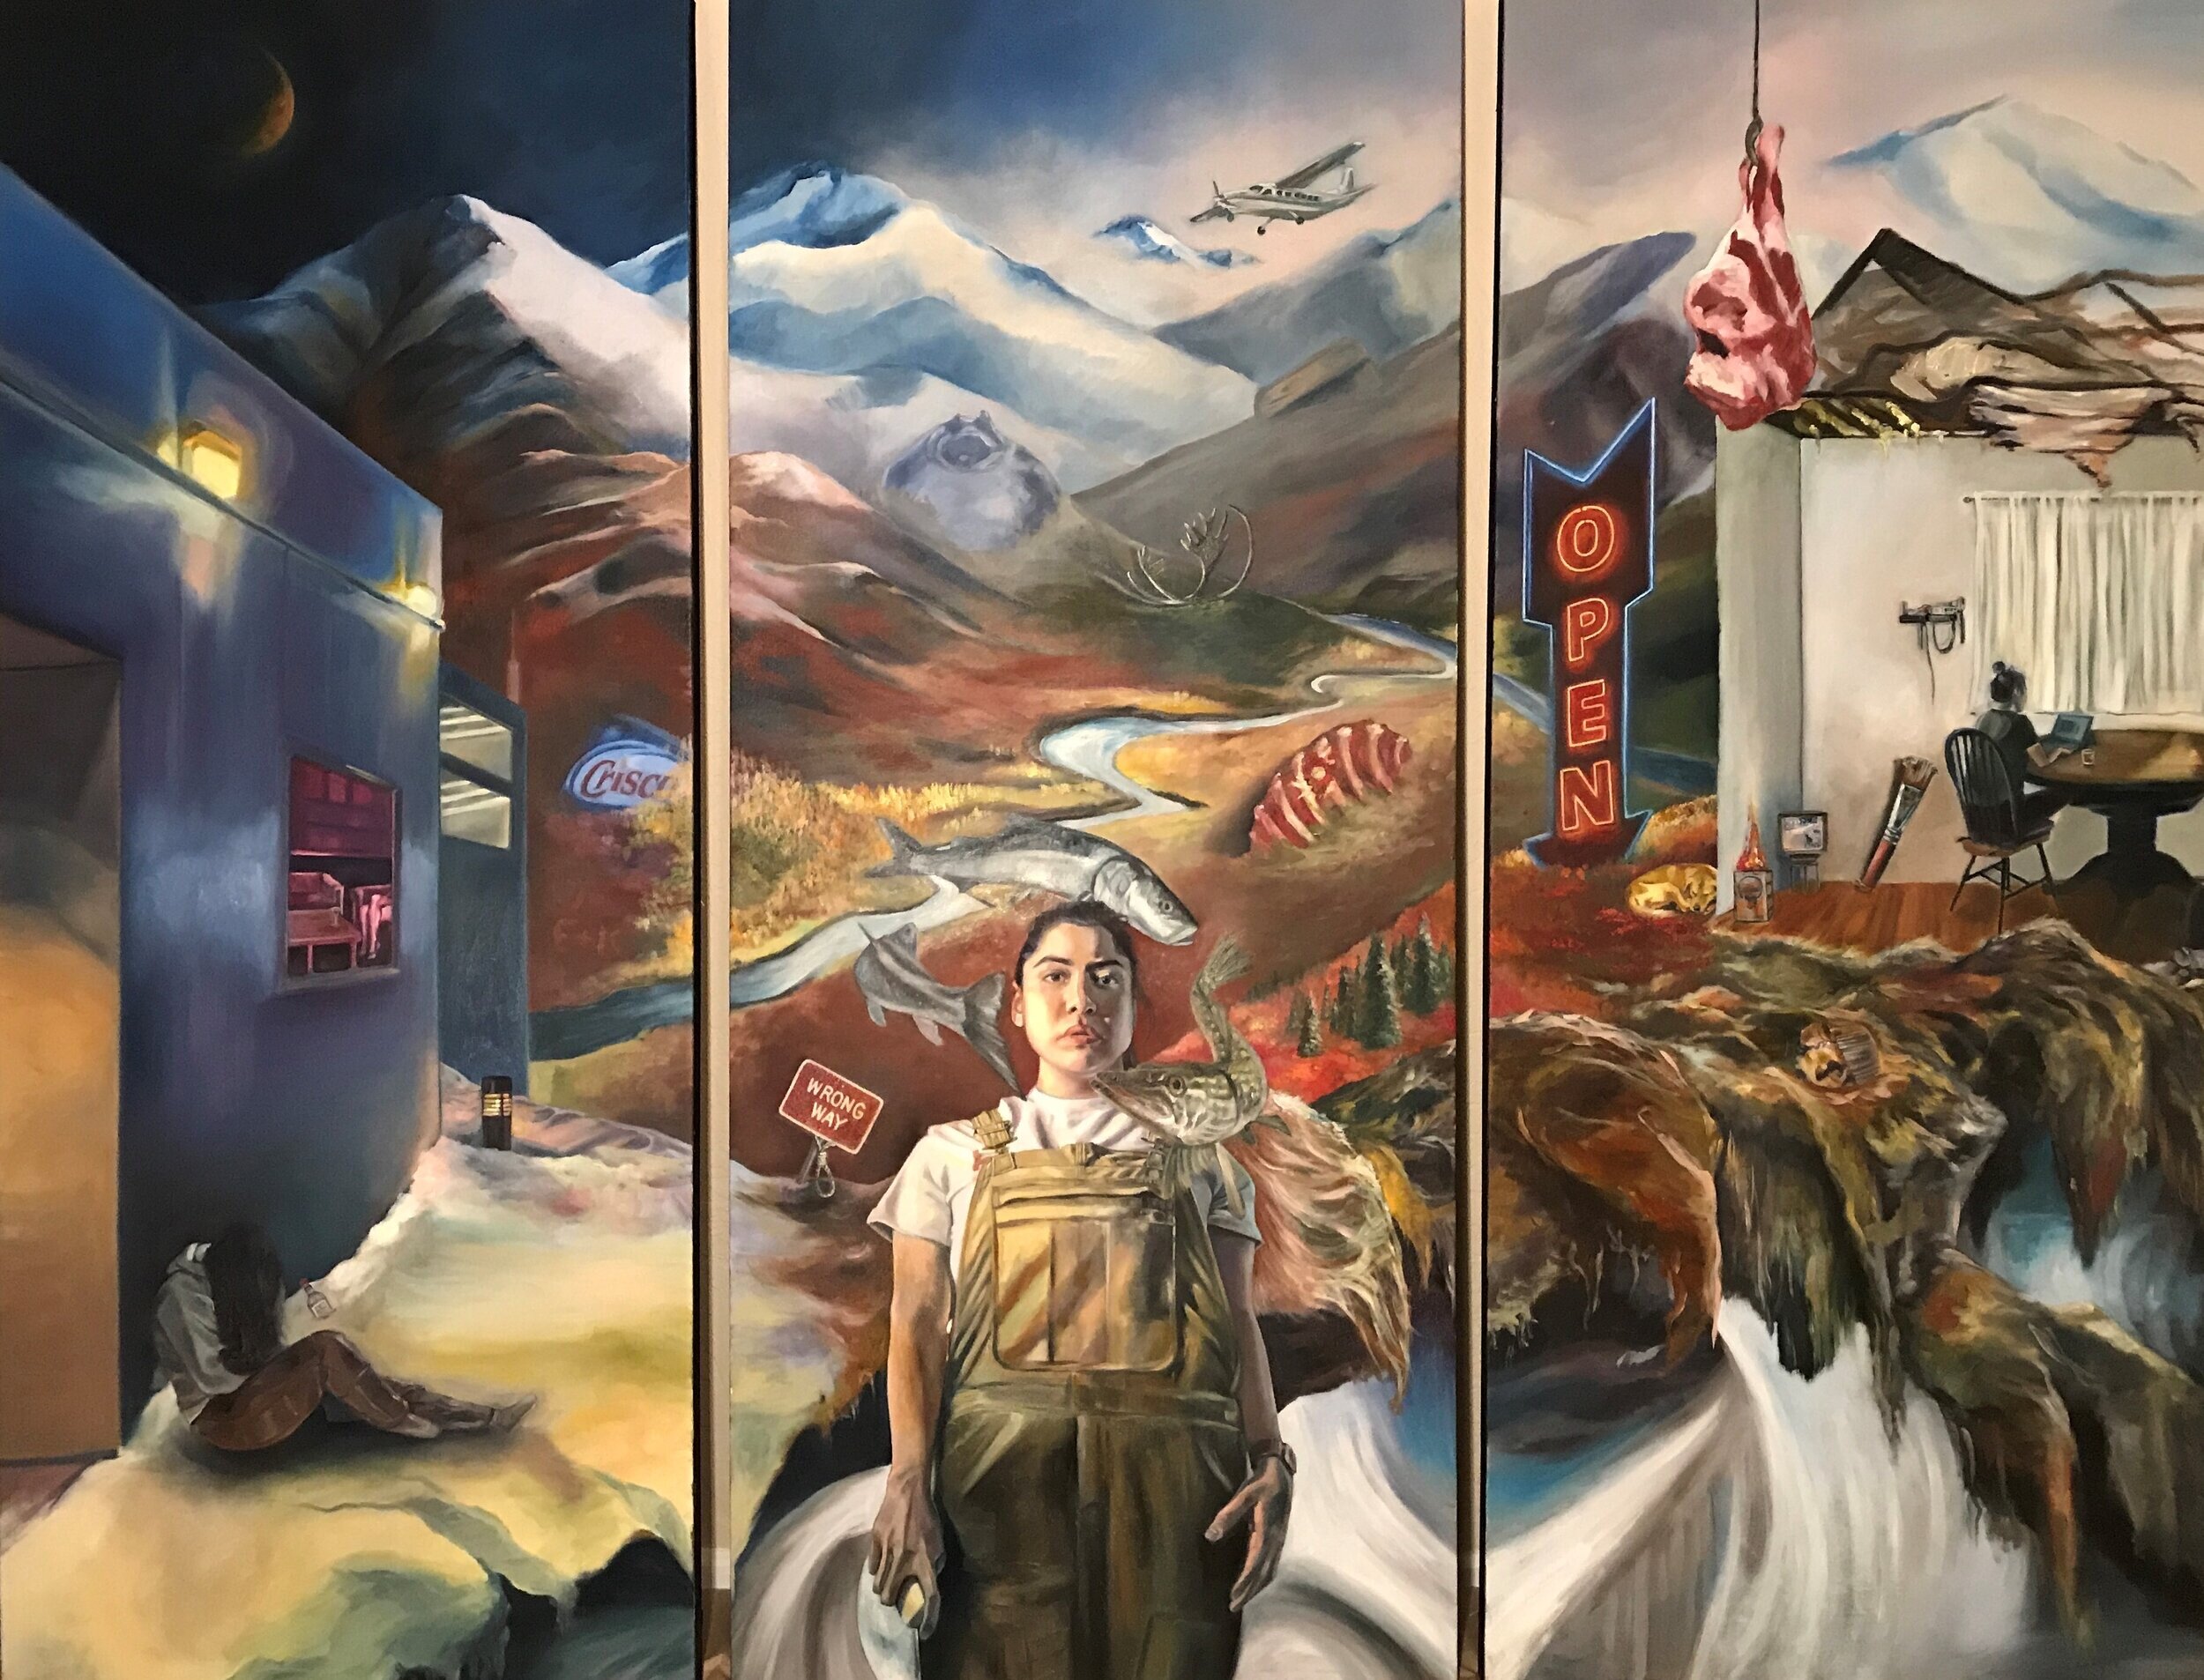  May 2020 -  Paaqlaktautaiññiq , by Kimberlyn Sheldon, 2020, Oil on canvas, 7’ x 9’ 